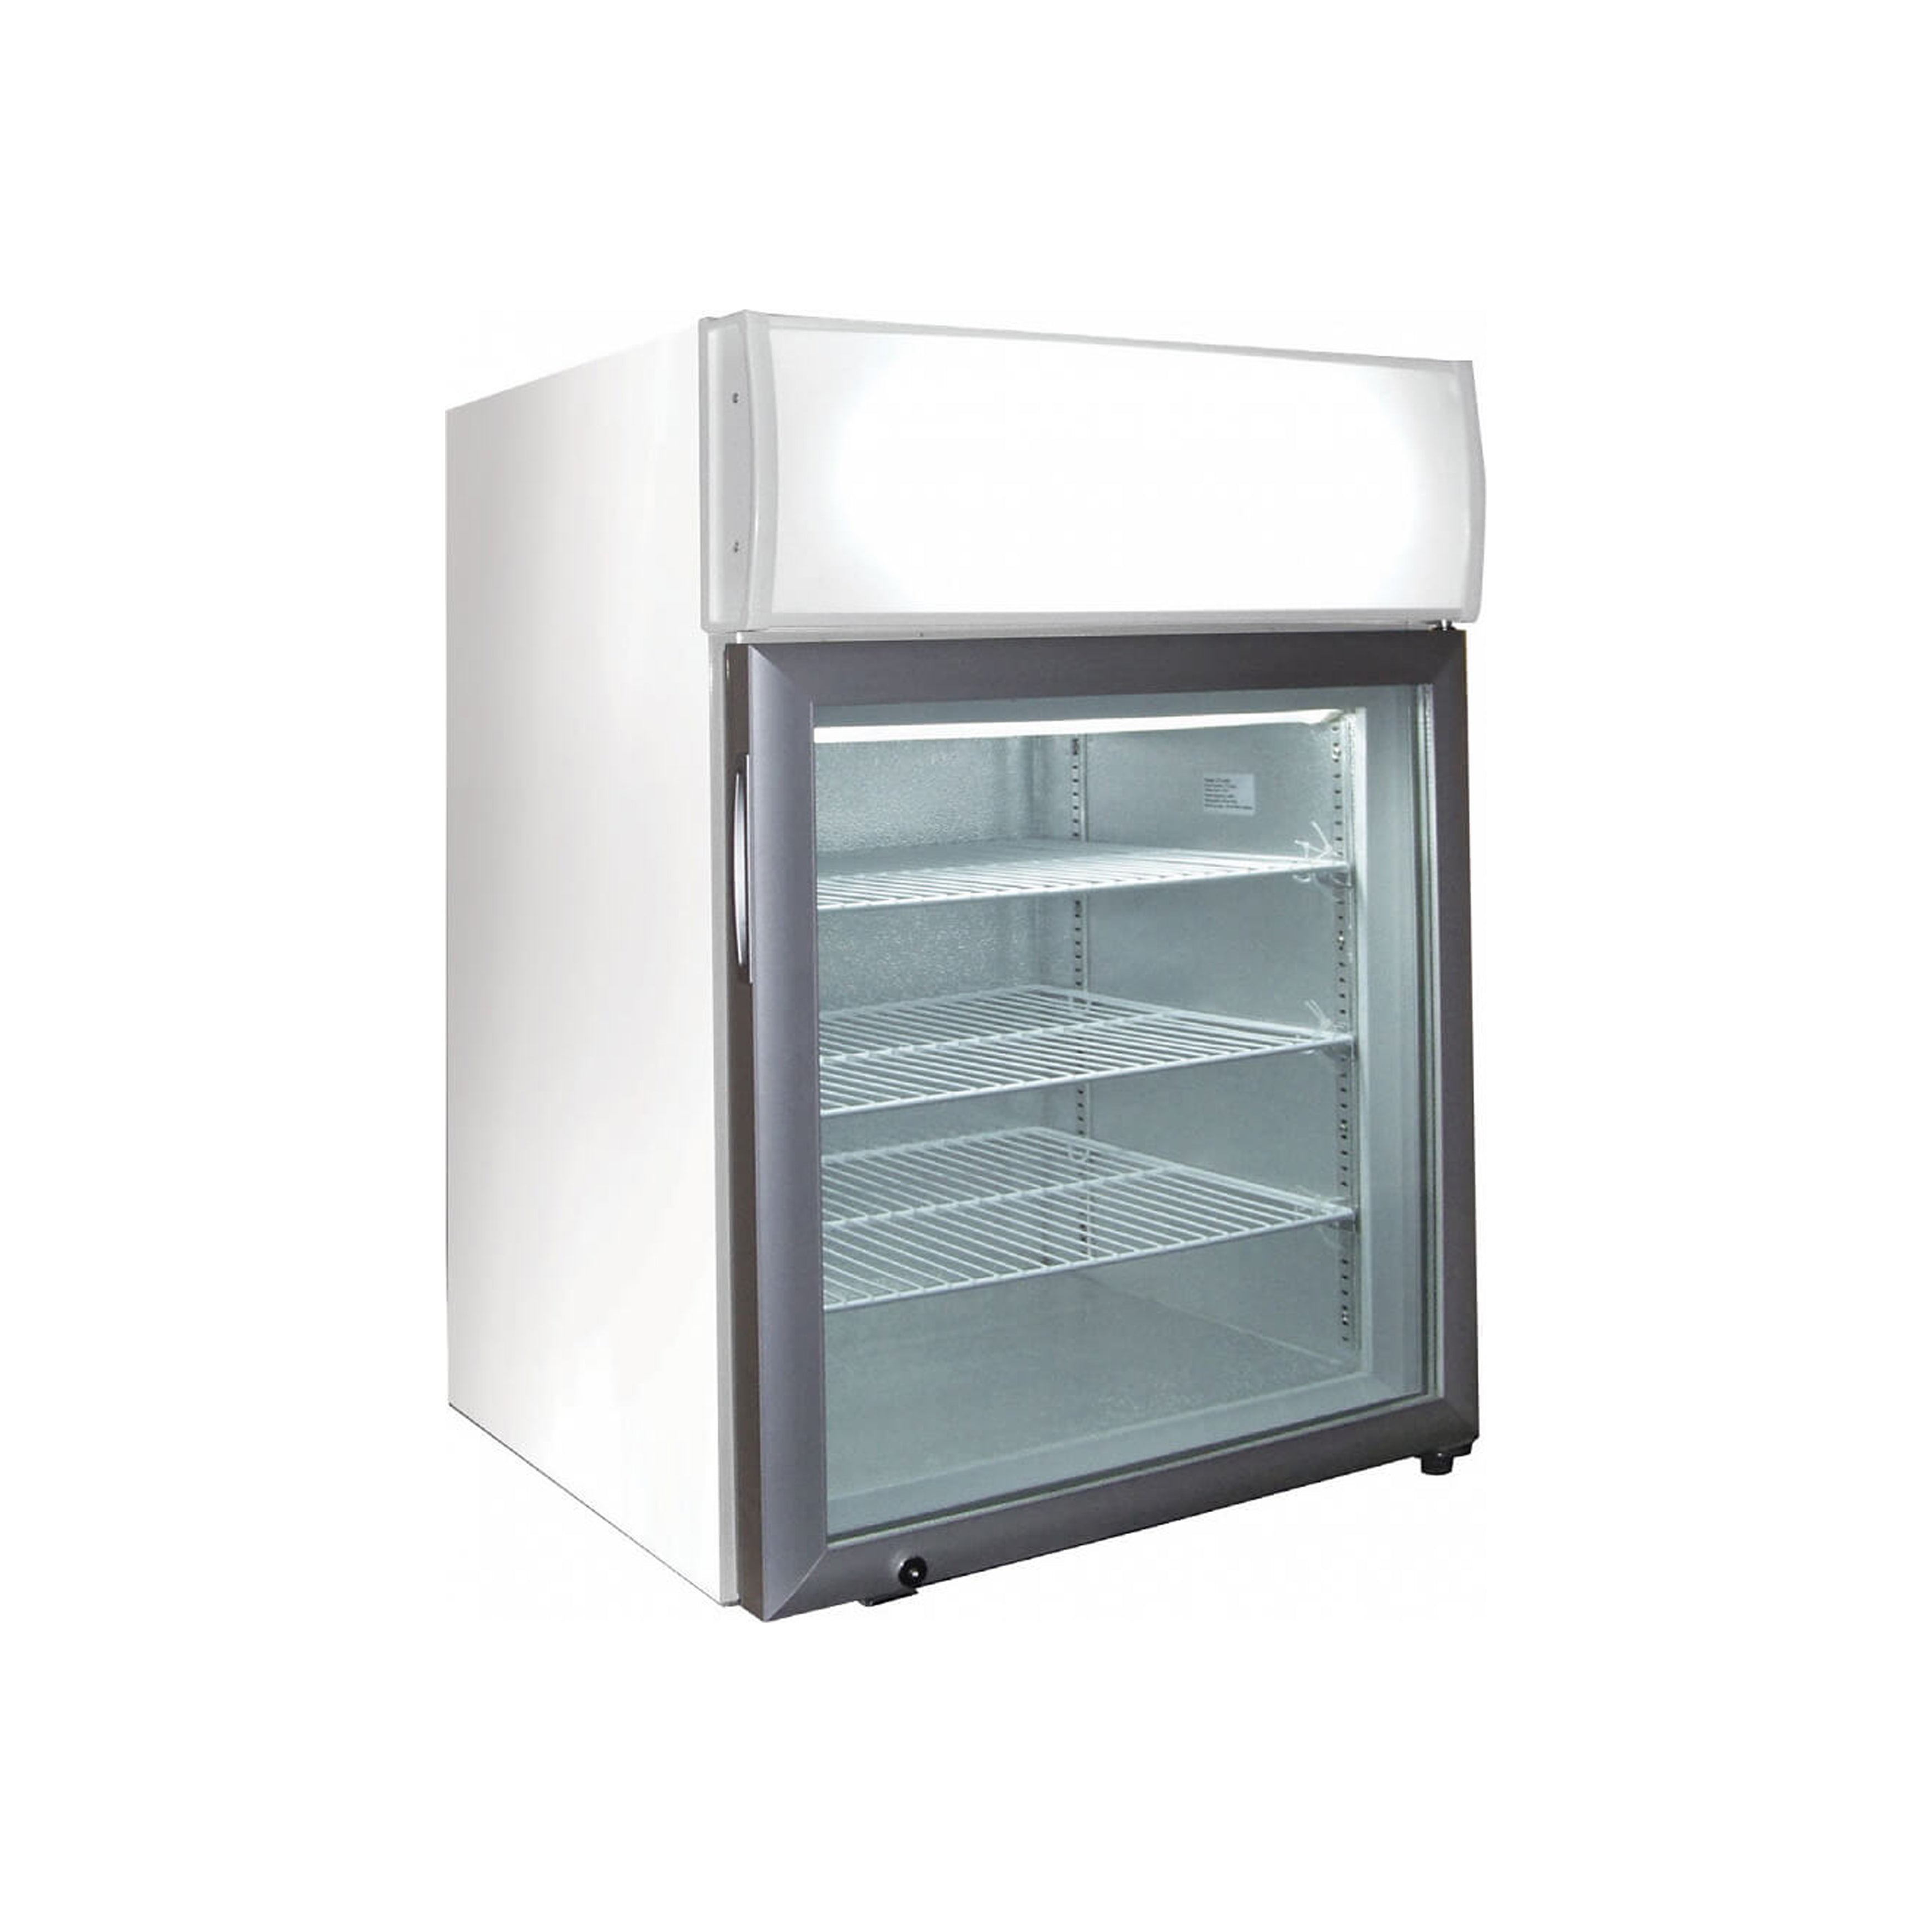 Excellence Industries - CTF-4HCMS, 22.63" Commercial Countertop Merchandiser Freezer 4.2 cu. ft.